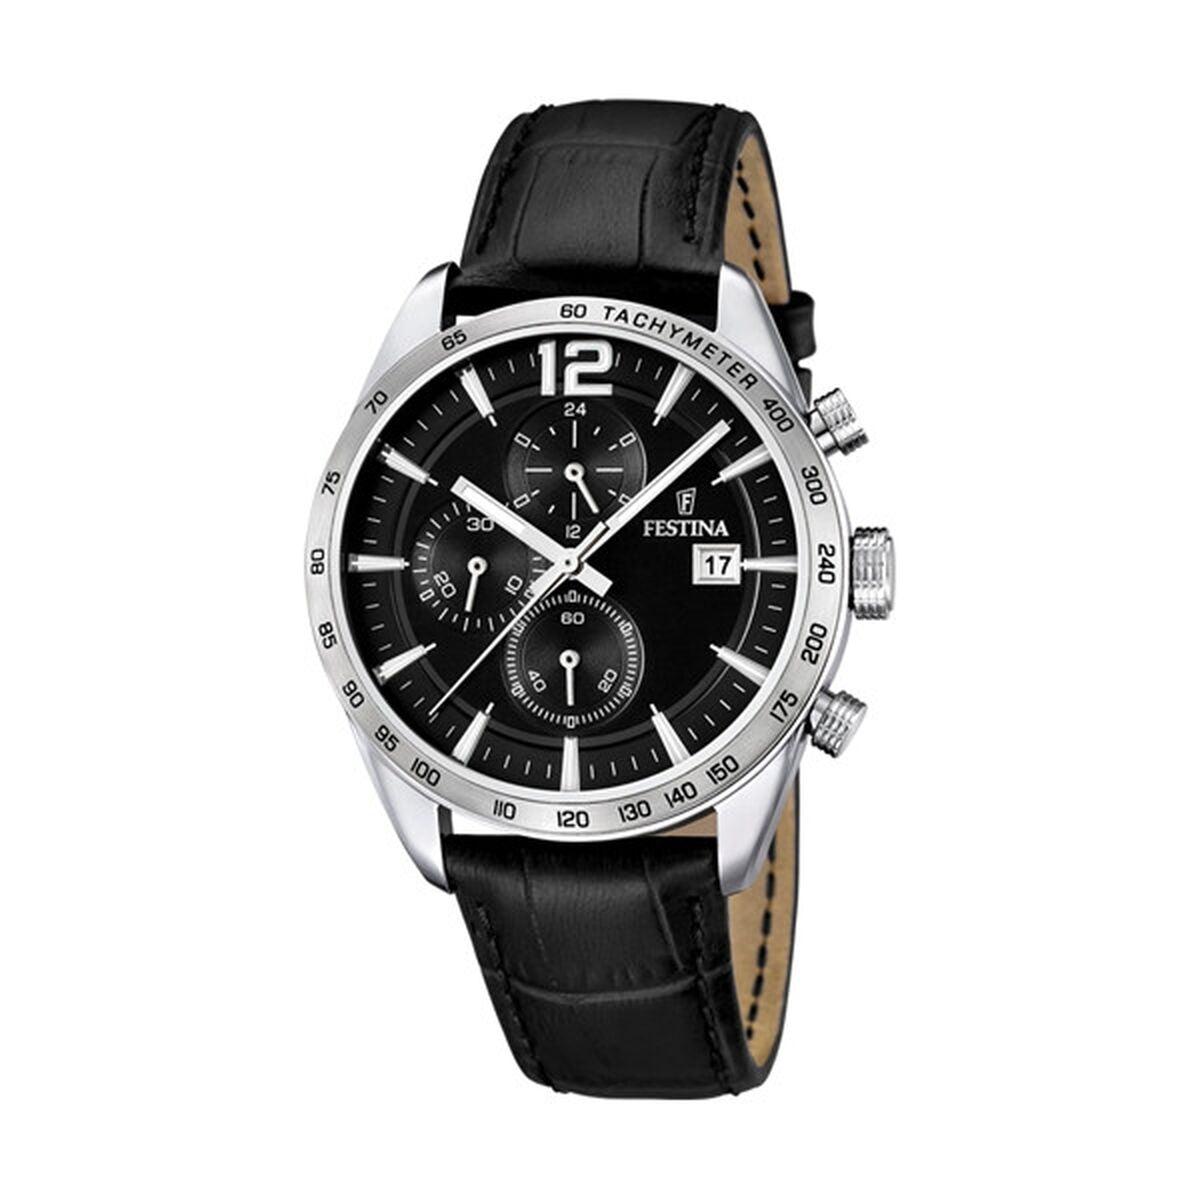 Festina Men's Watch F16760/4 Black for Men | Lyst